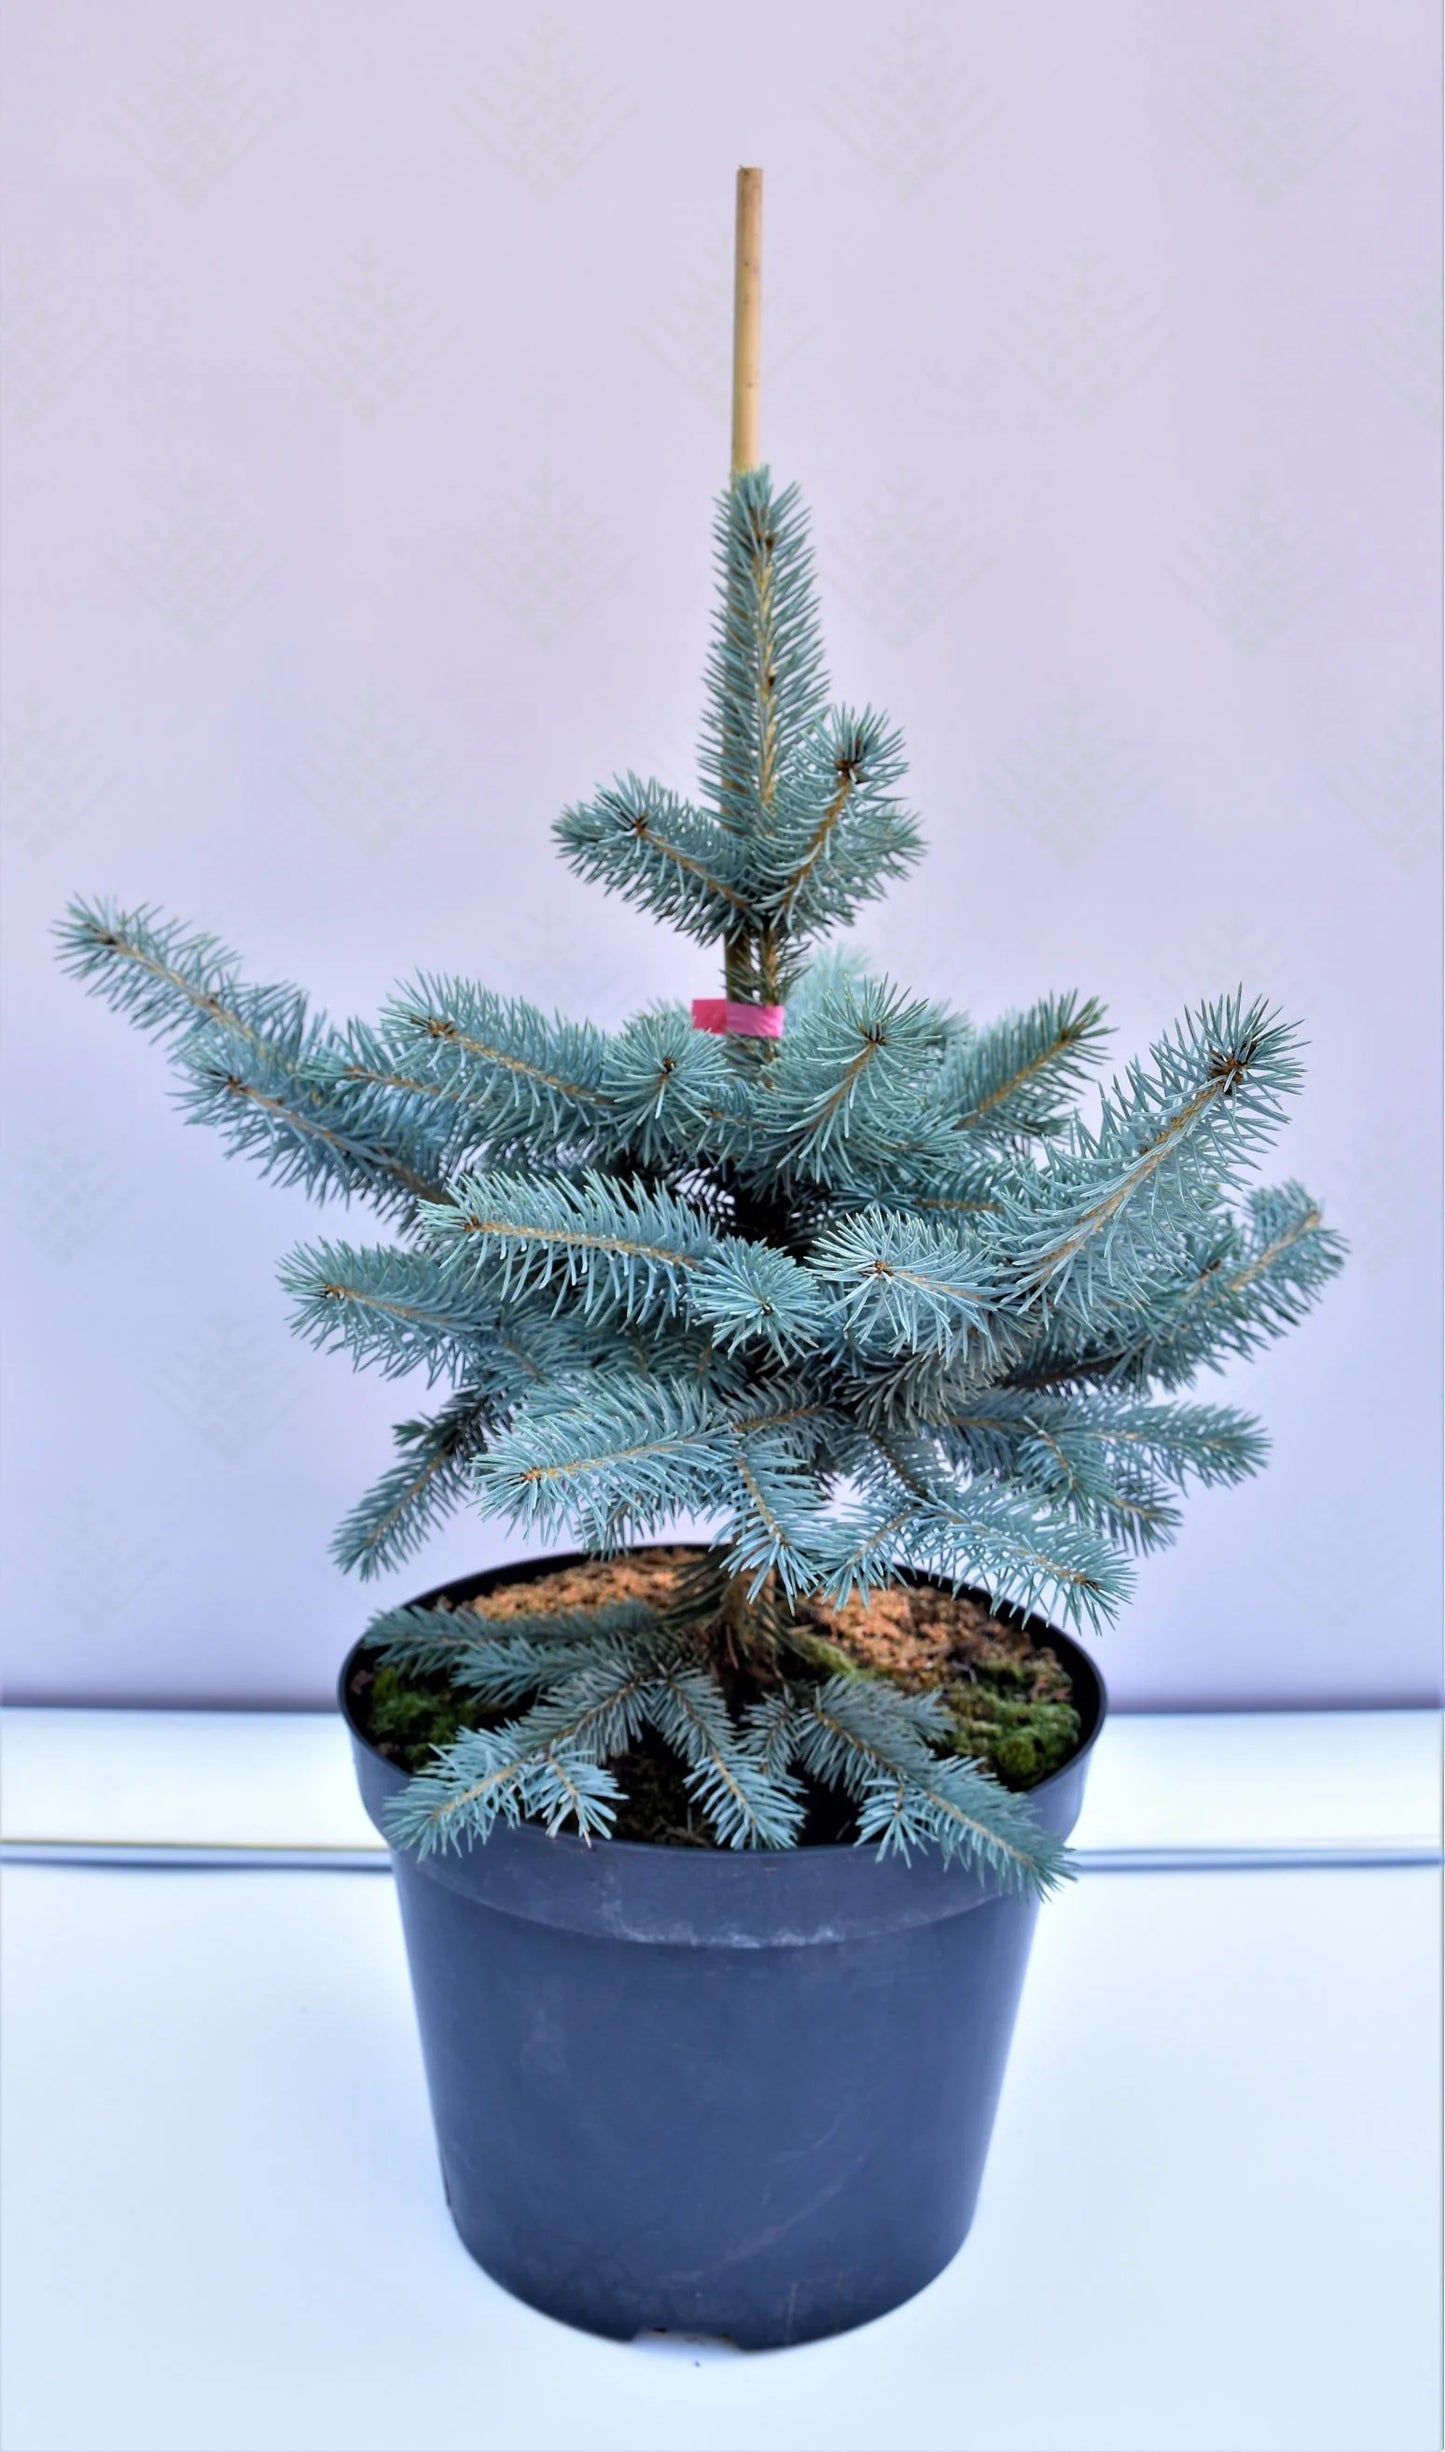 Picea Pungens "Blue Mountain" - Sinikuusi